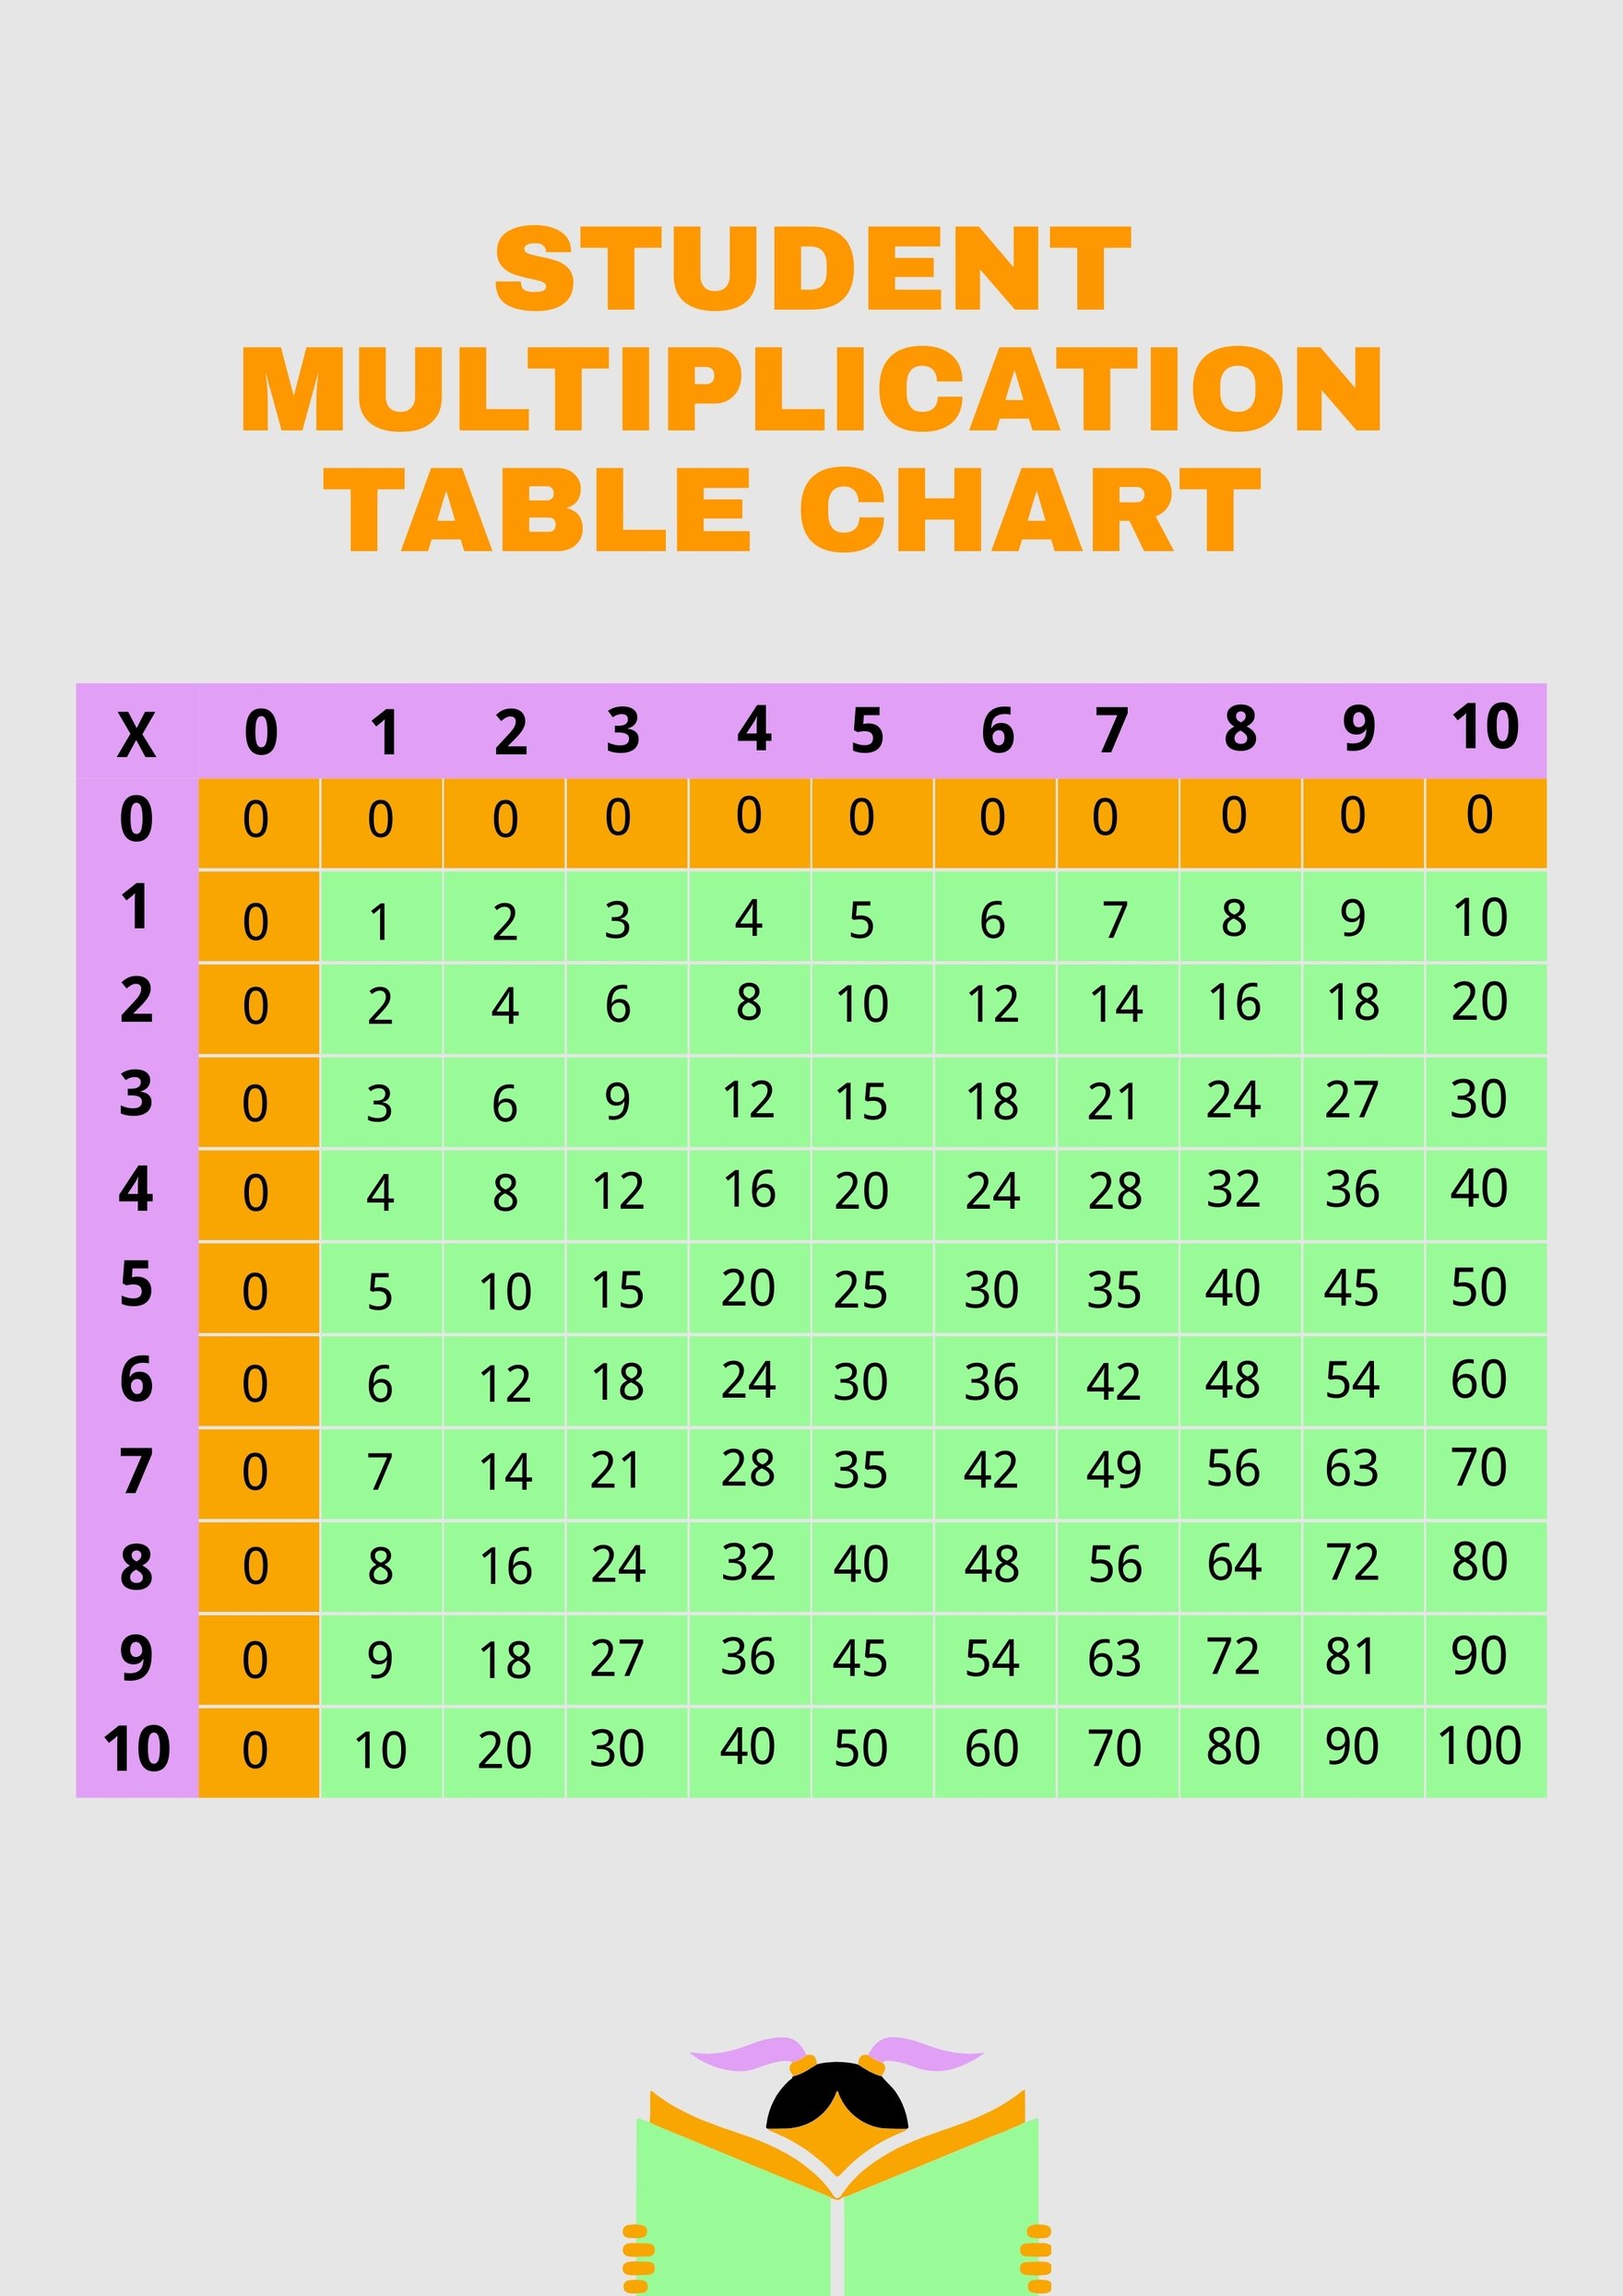 multiplication-table-pdf-1-10-bruin-blog